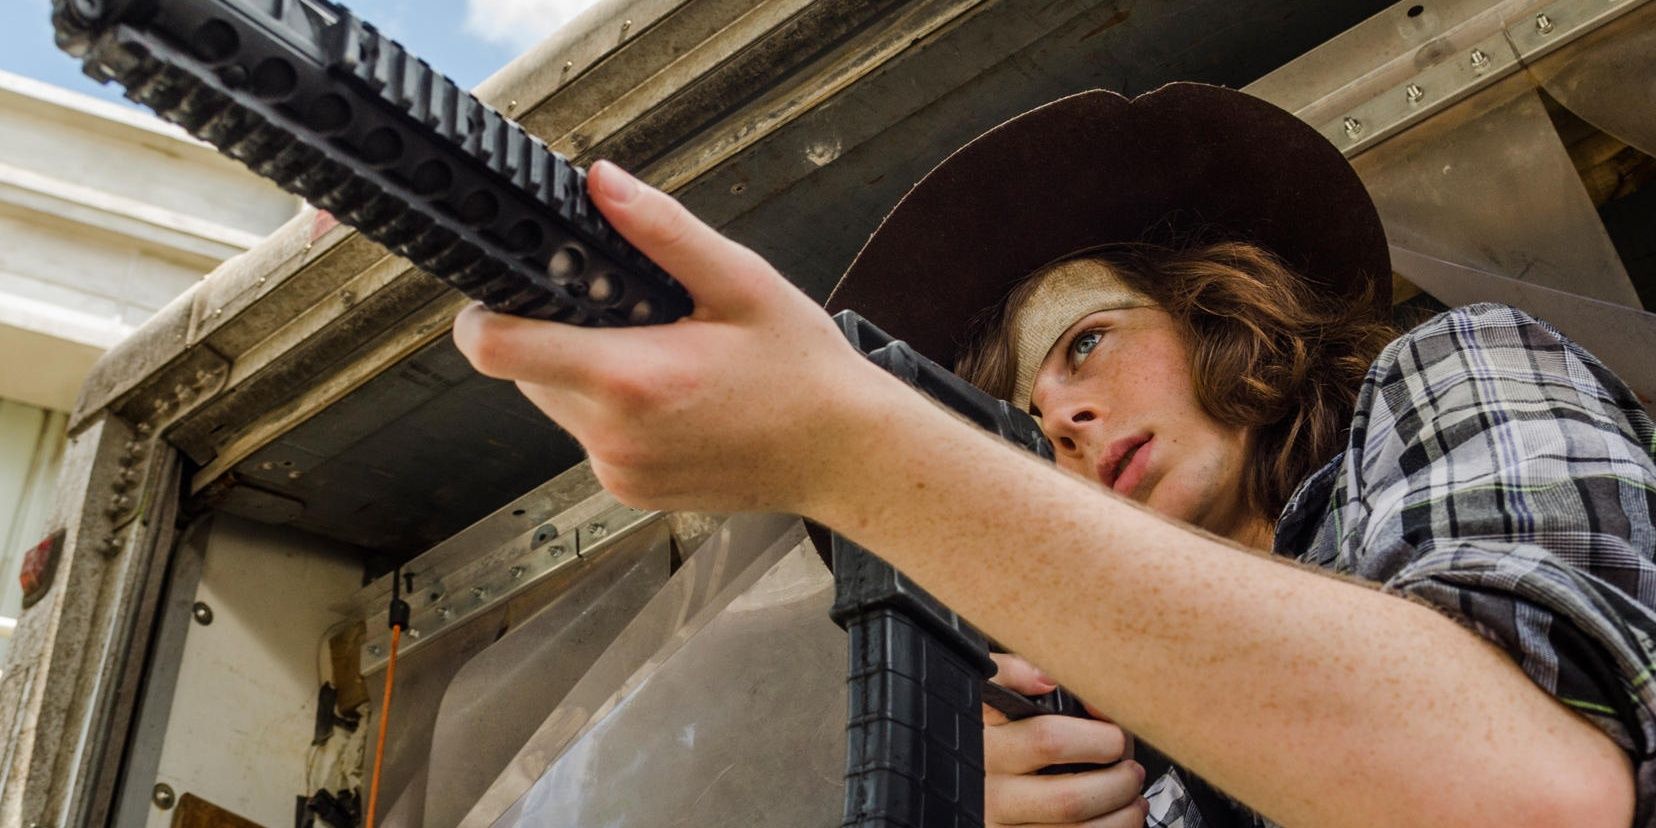 Carl aiming a gun at Negan on The Walking Dead.